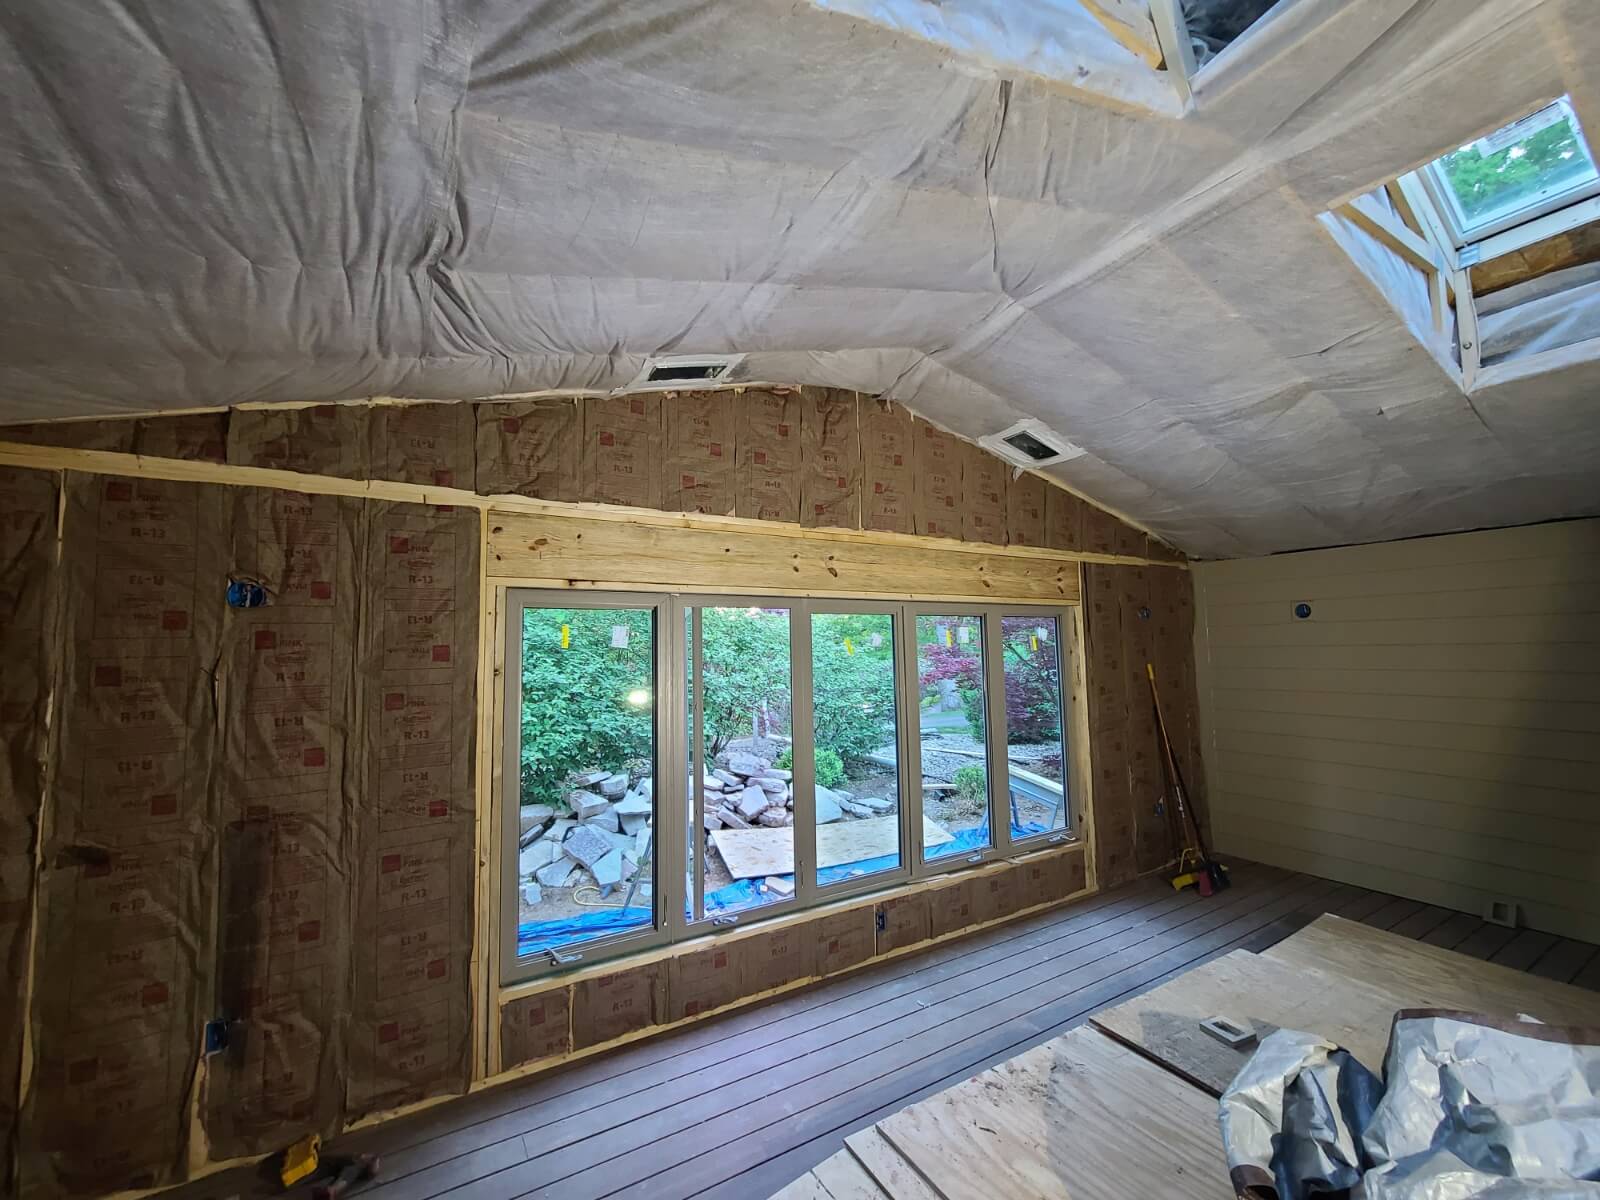 St. Augustine attic insulation company